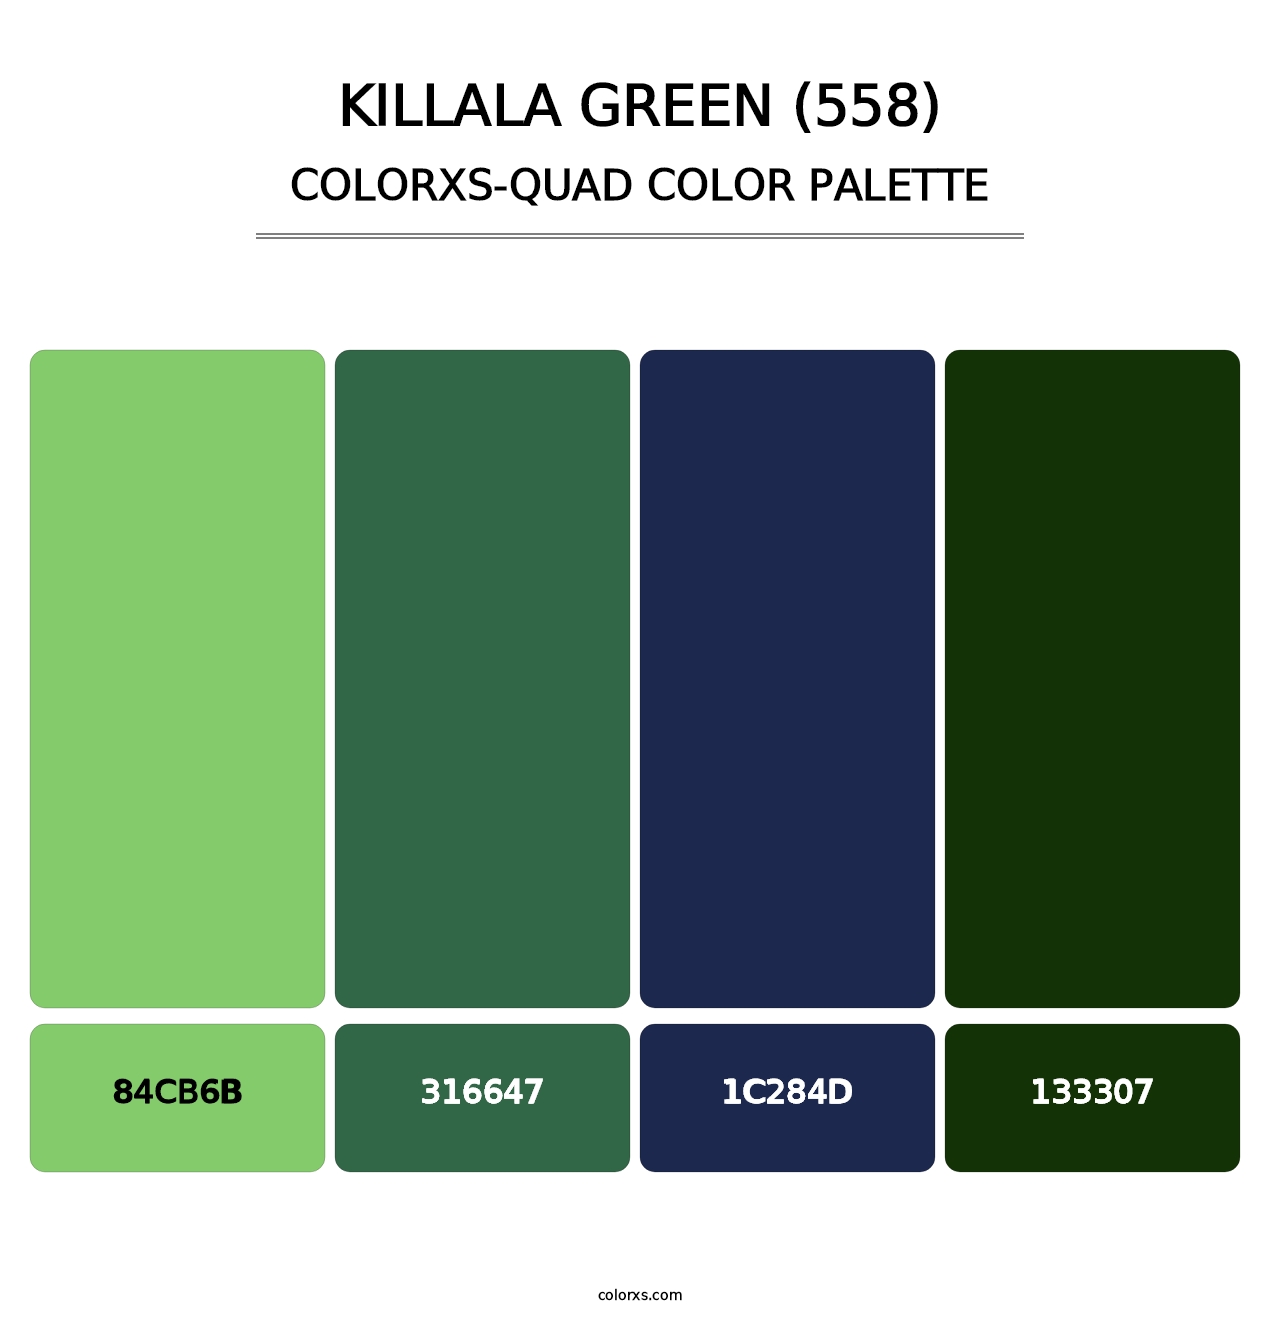 Killala Green (558) - Colorxs Quad Palette